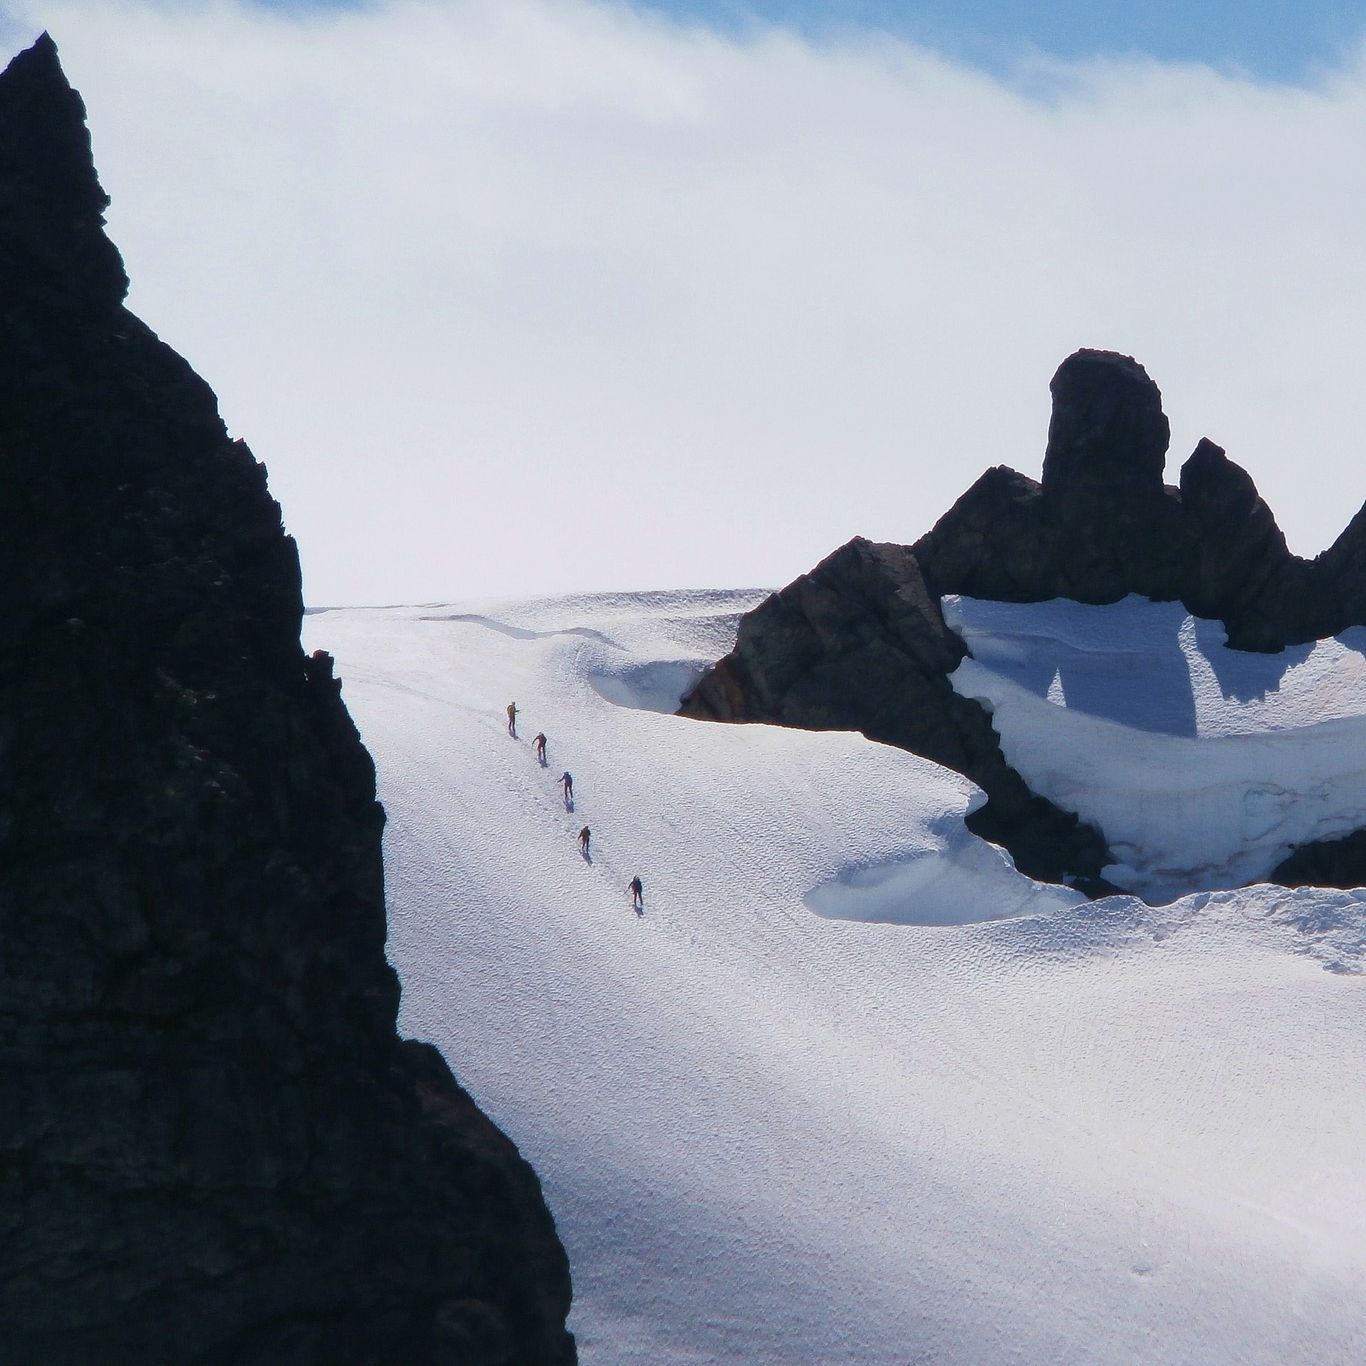 Climbers ascending a glacier